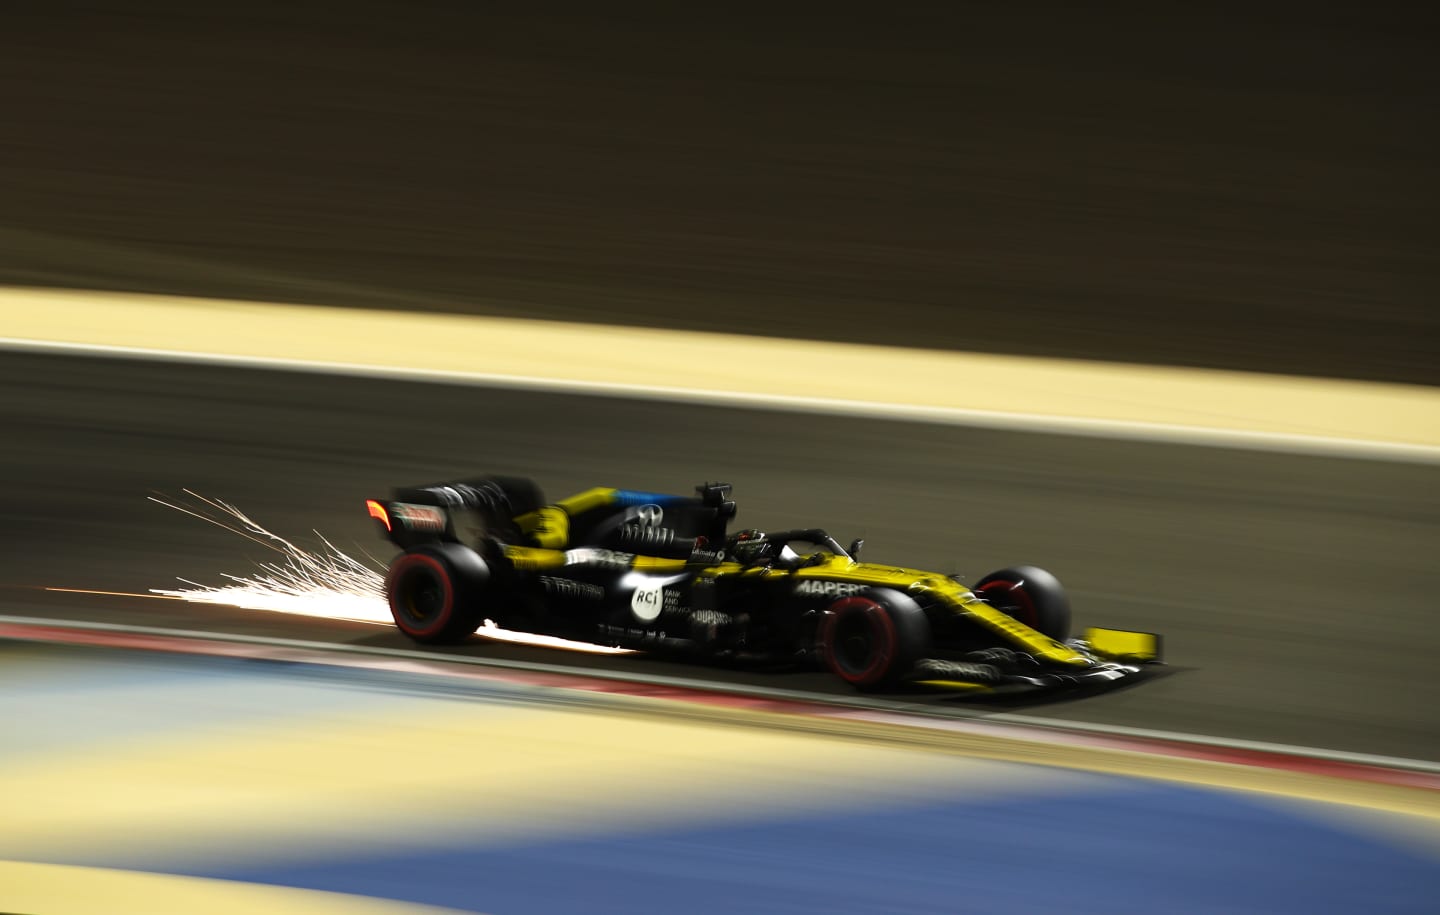 BAHRAIN, BAHRAIN - DECEMBER 04: Daniel Ricciardo of Australia driving the (3) Renault Sport Formula One Team RS20 on track during practice ahead of the F1 Grand Prix of Sakhir at Bahrain International Circuit on December 04, 2020 in Bahrain, Bahrain. (Photo by Bryn Lennon/Getty Images)